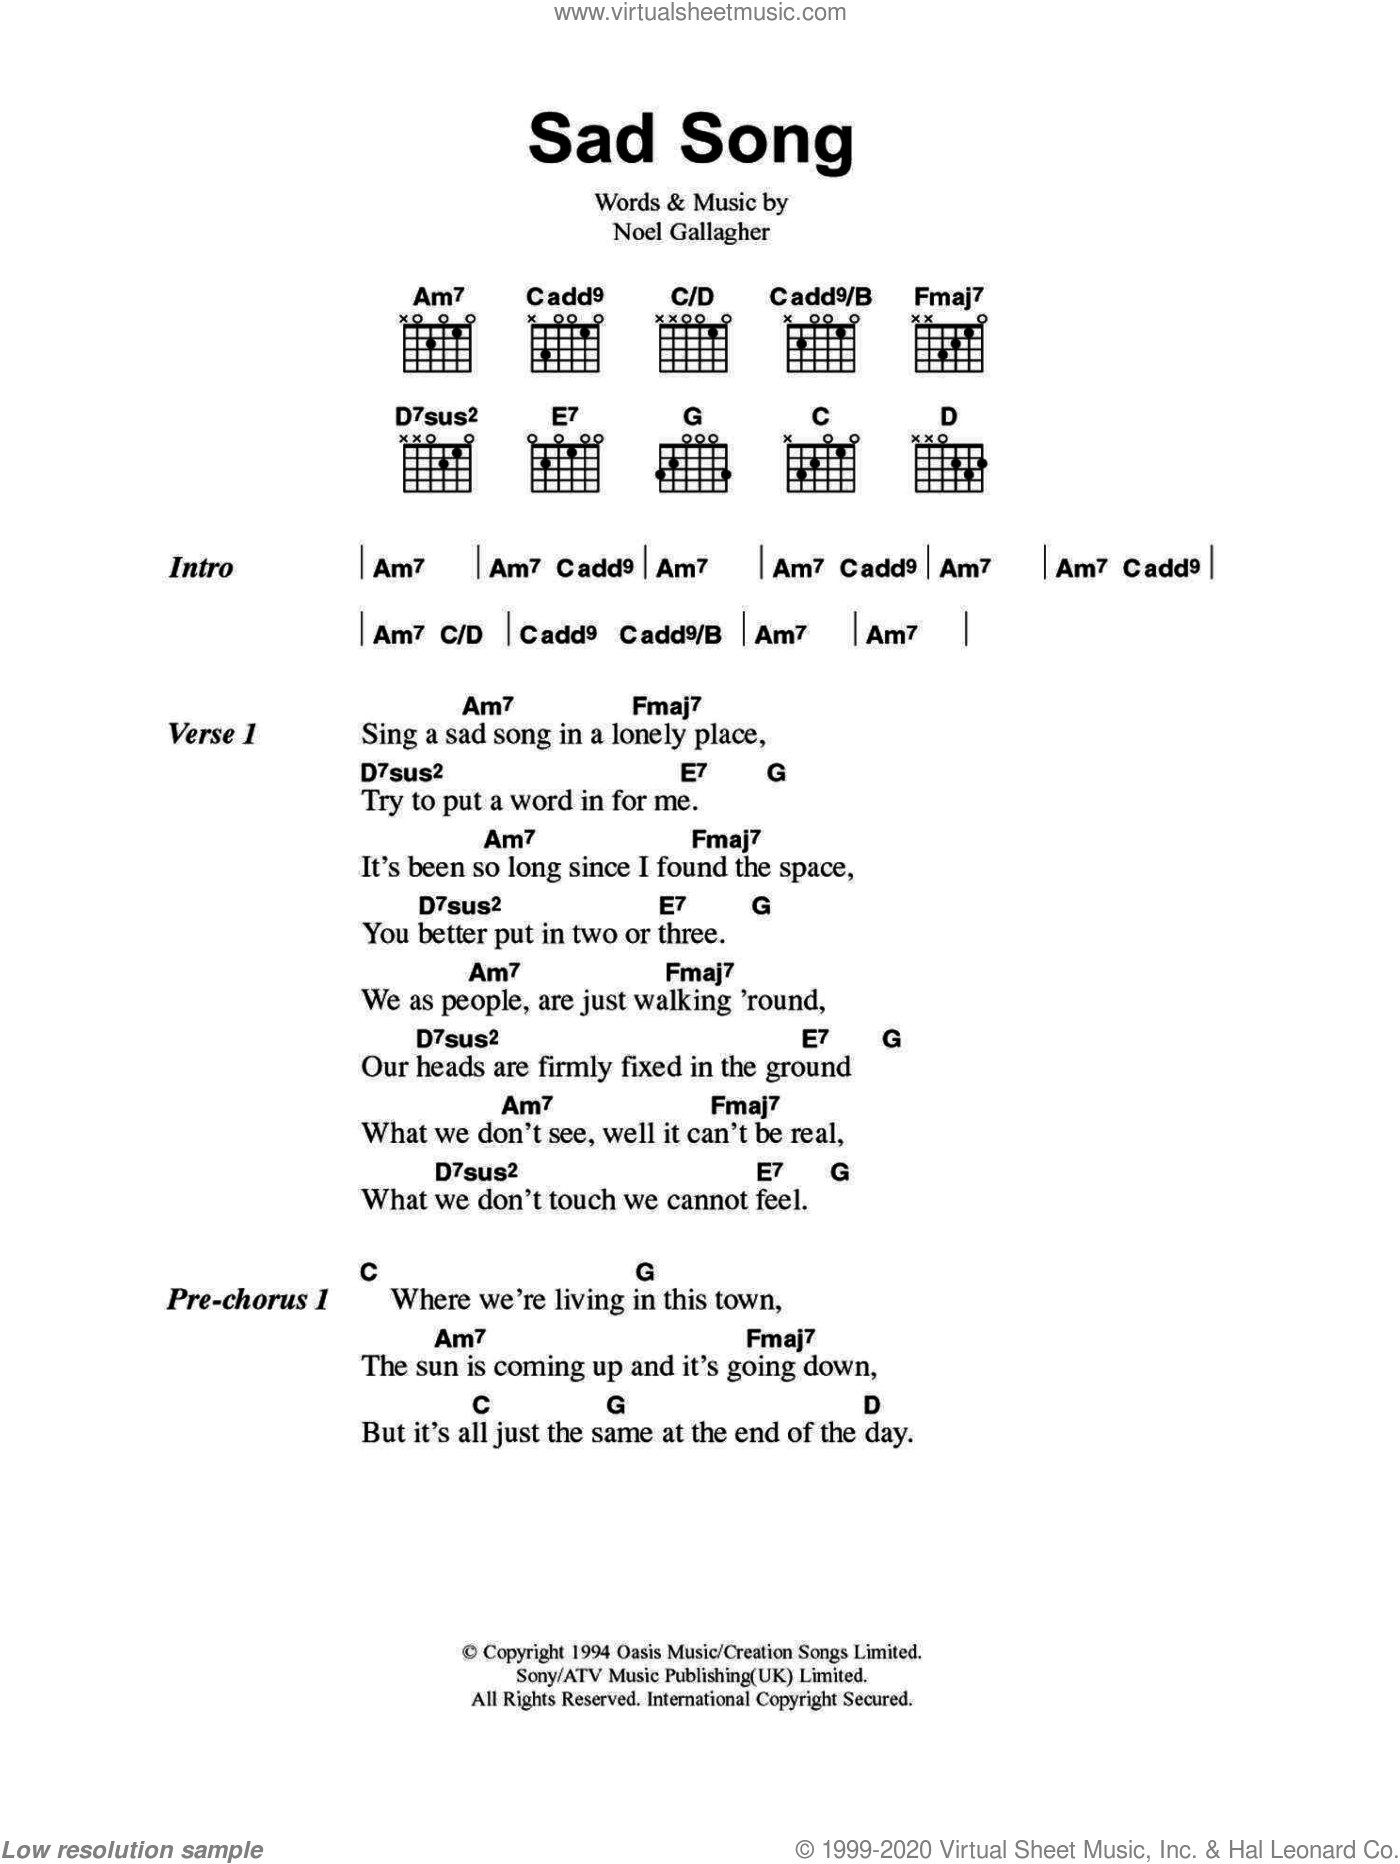 Oasis - Sad Song sheet music for guitar (chords) [PDF]